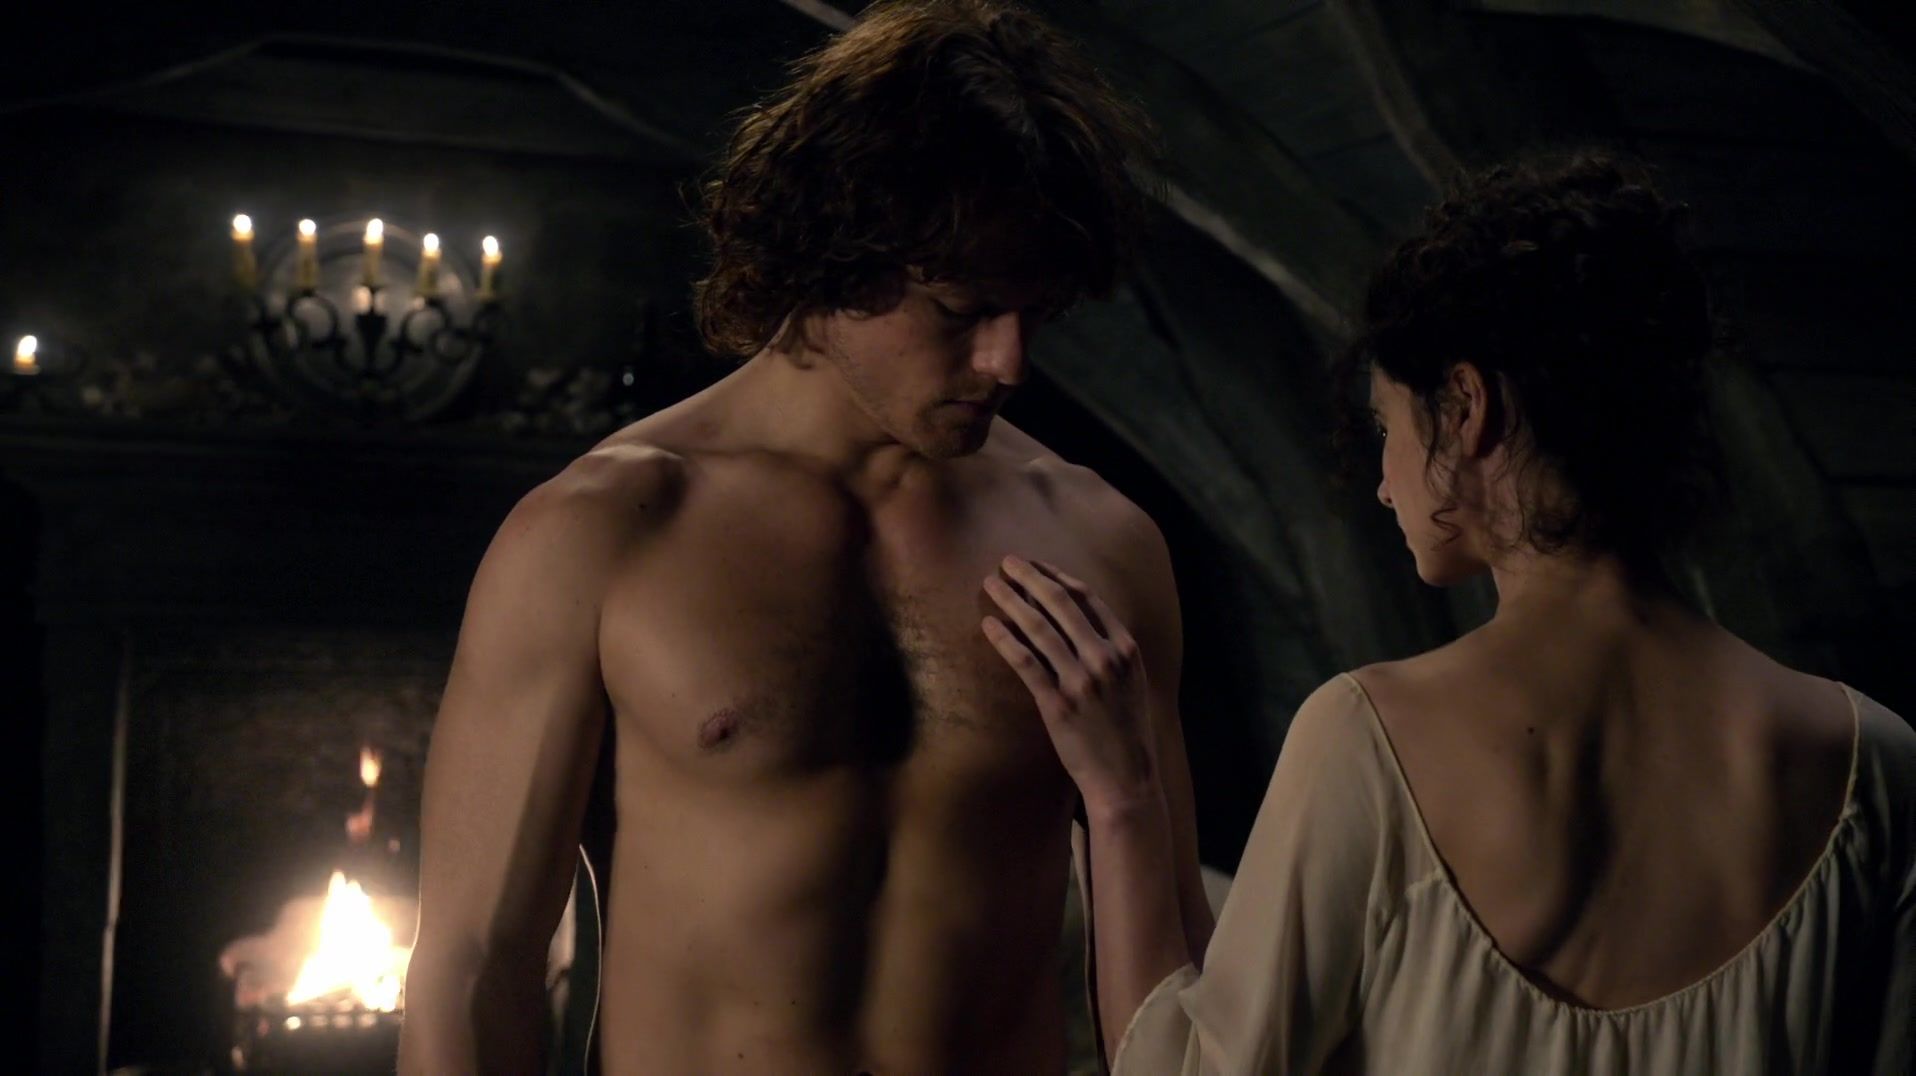 Nipple Sex scene of naked Caitriona Balfe | TV show "Outlander" TheyDidntKnow